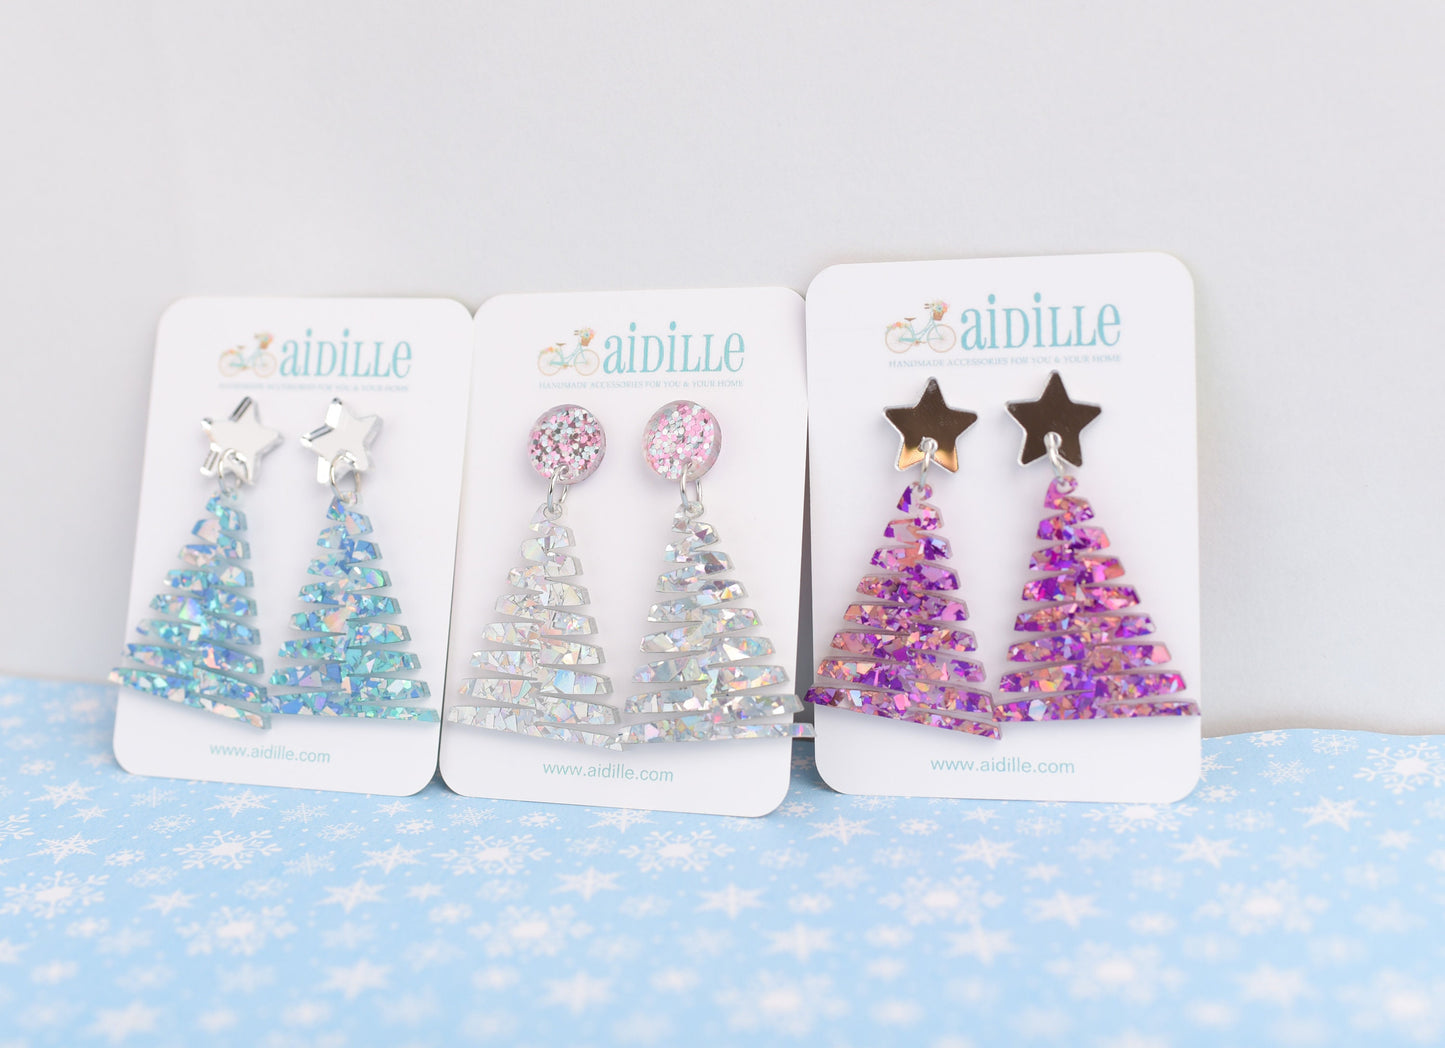 Purple Glitter Christmas Tree Dangles with Titanium Posts